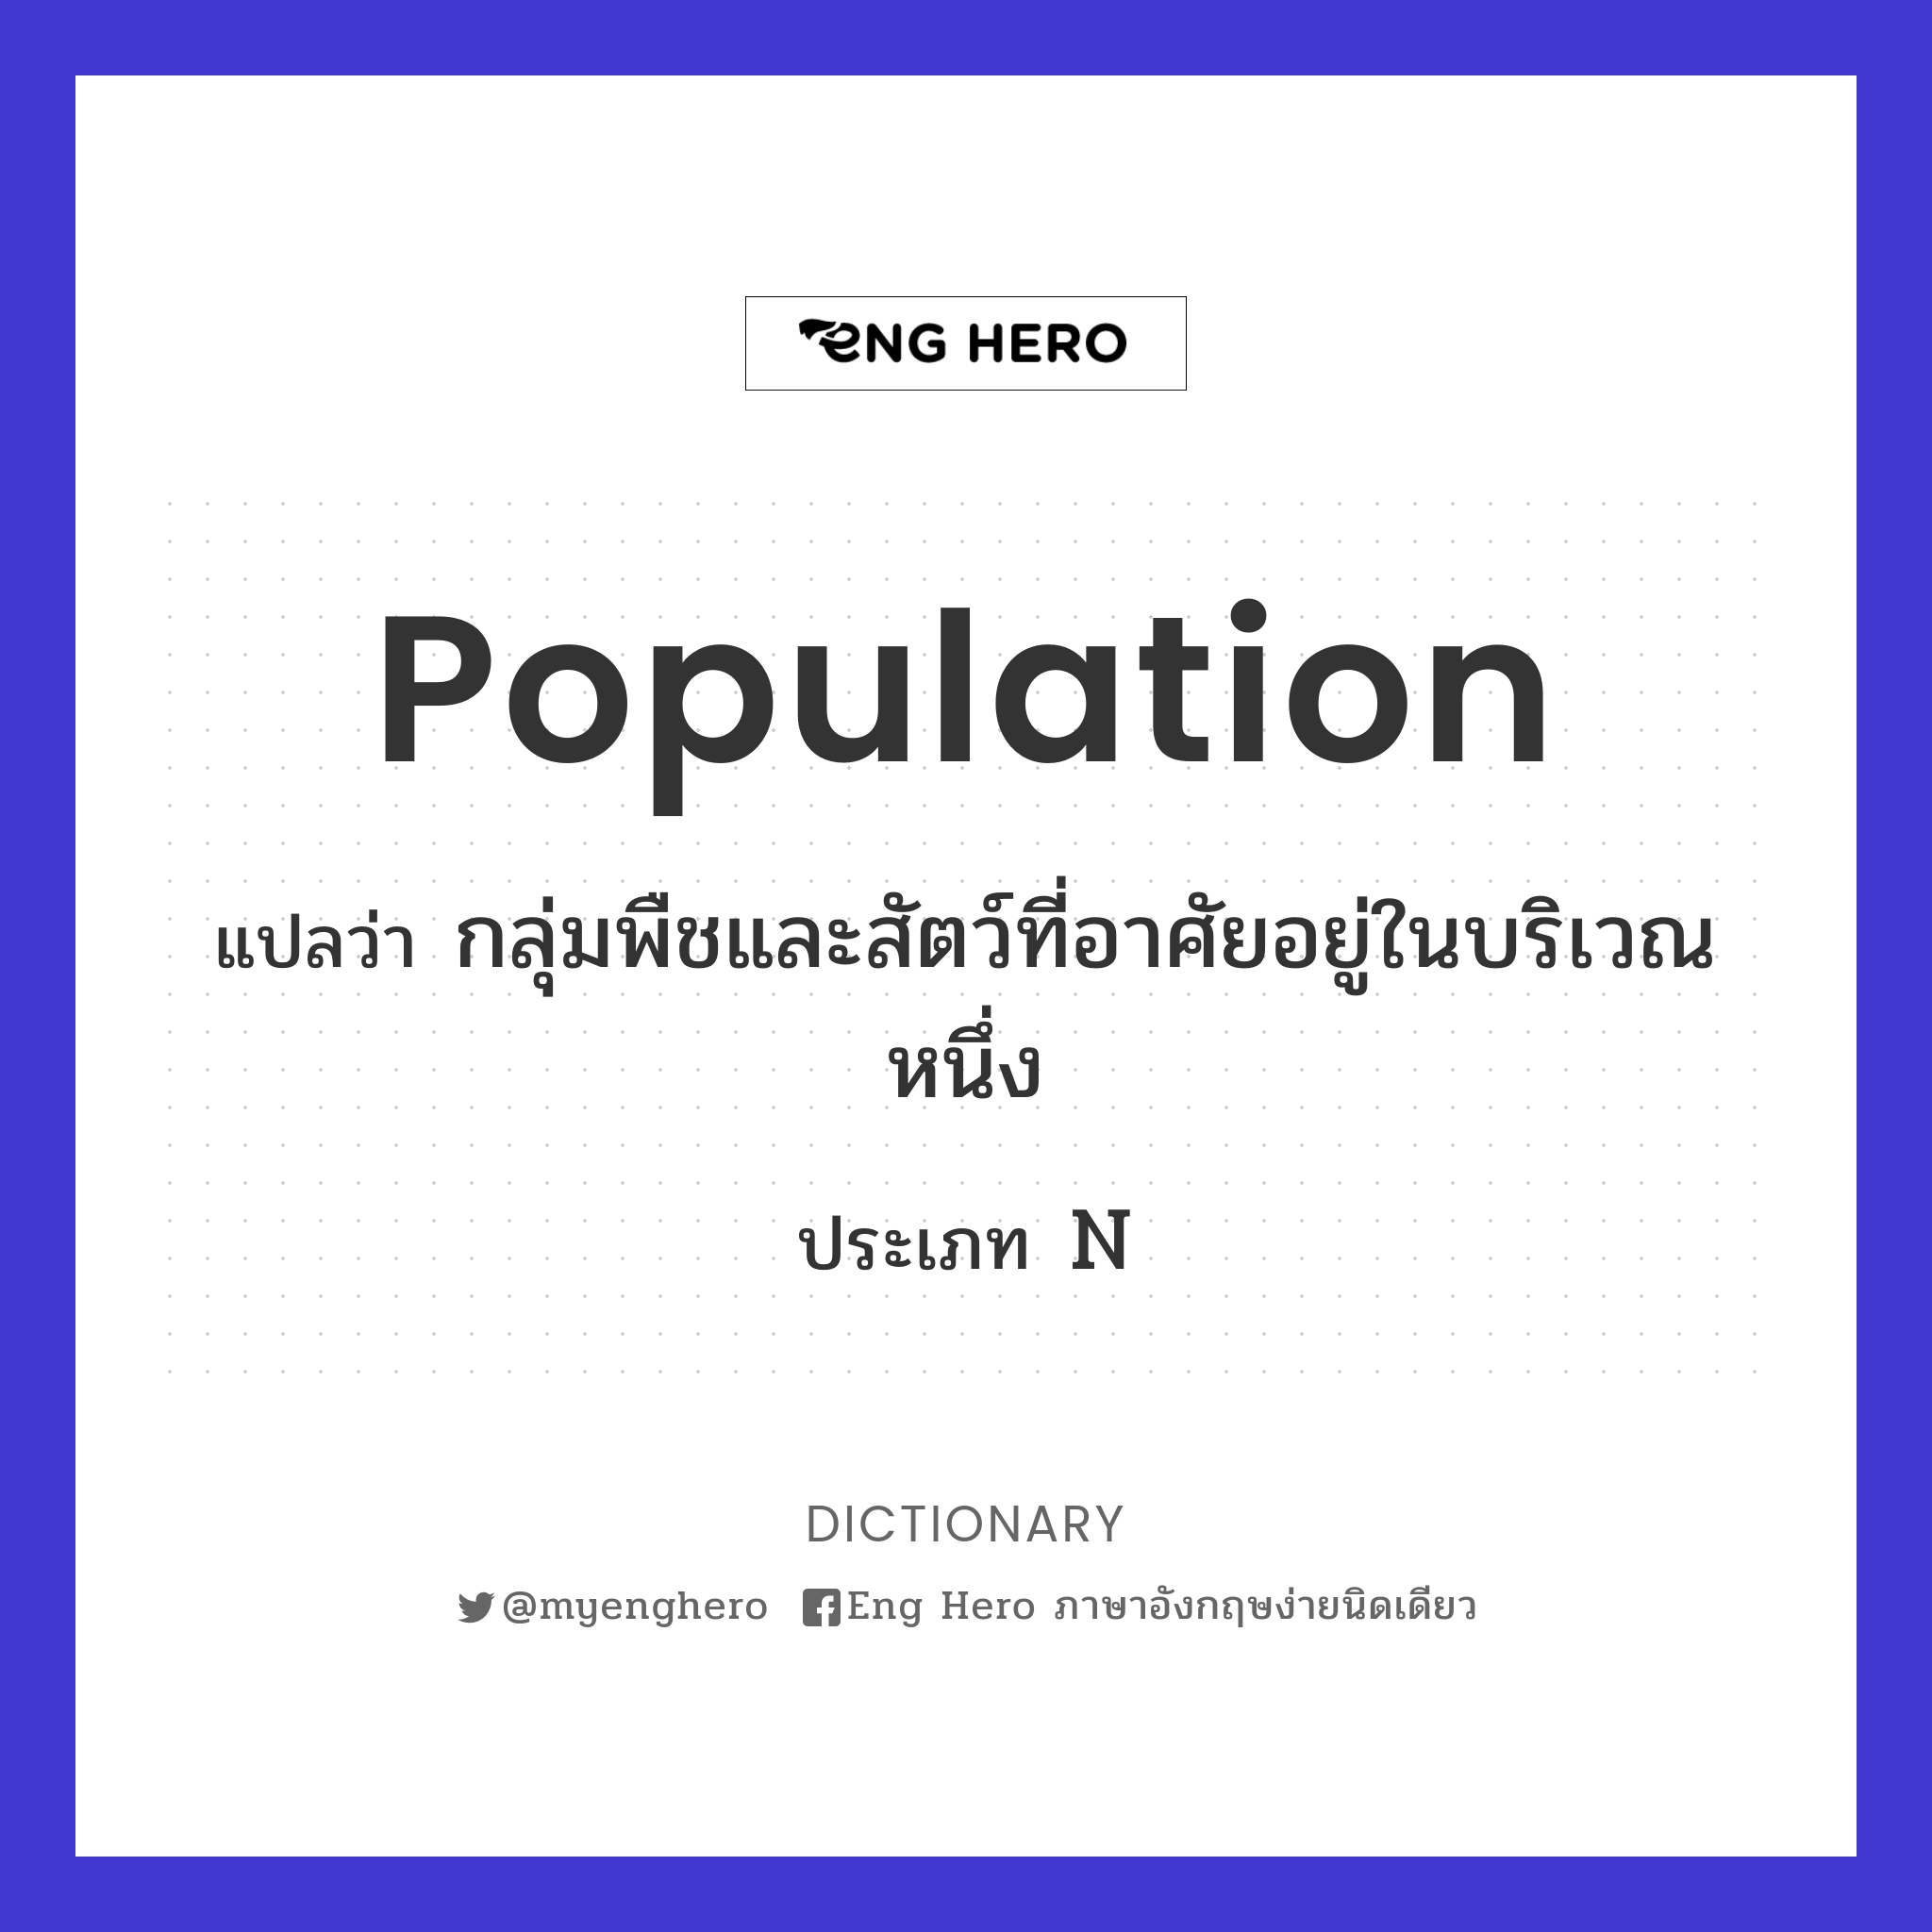 population